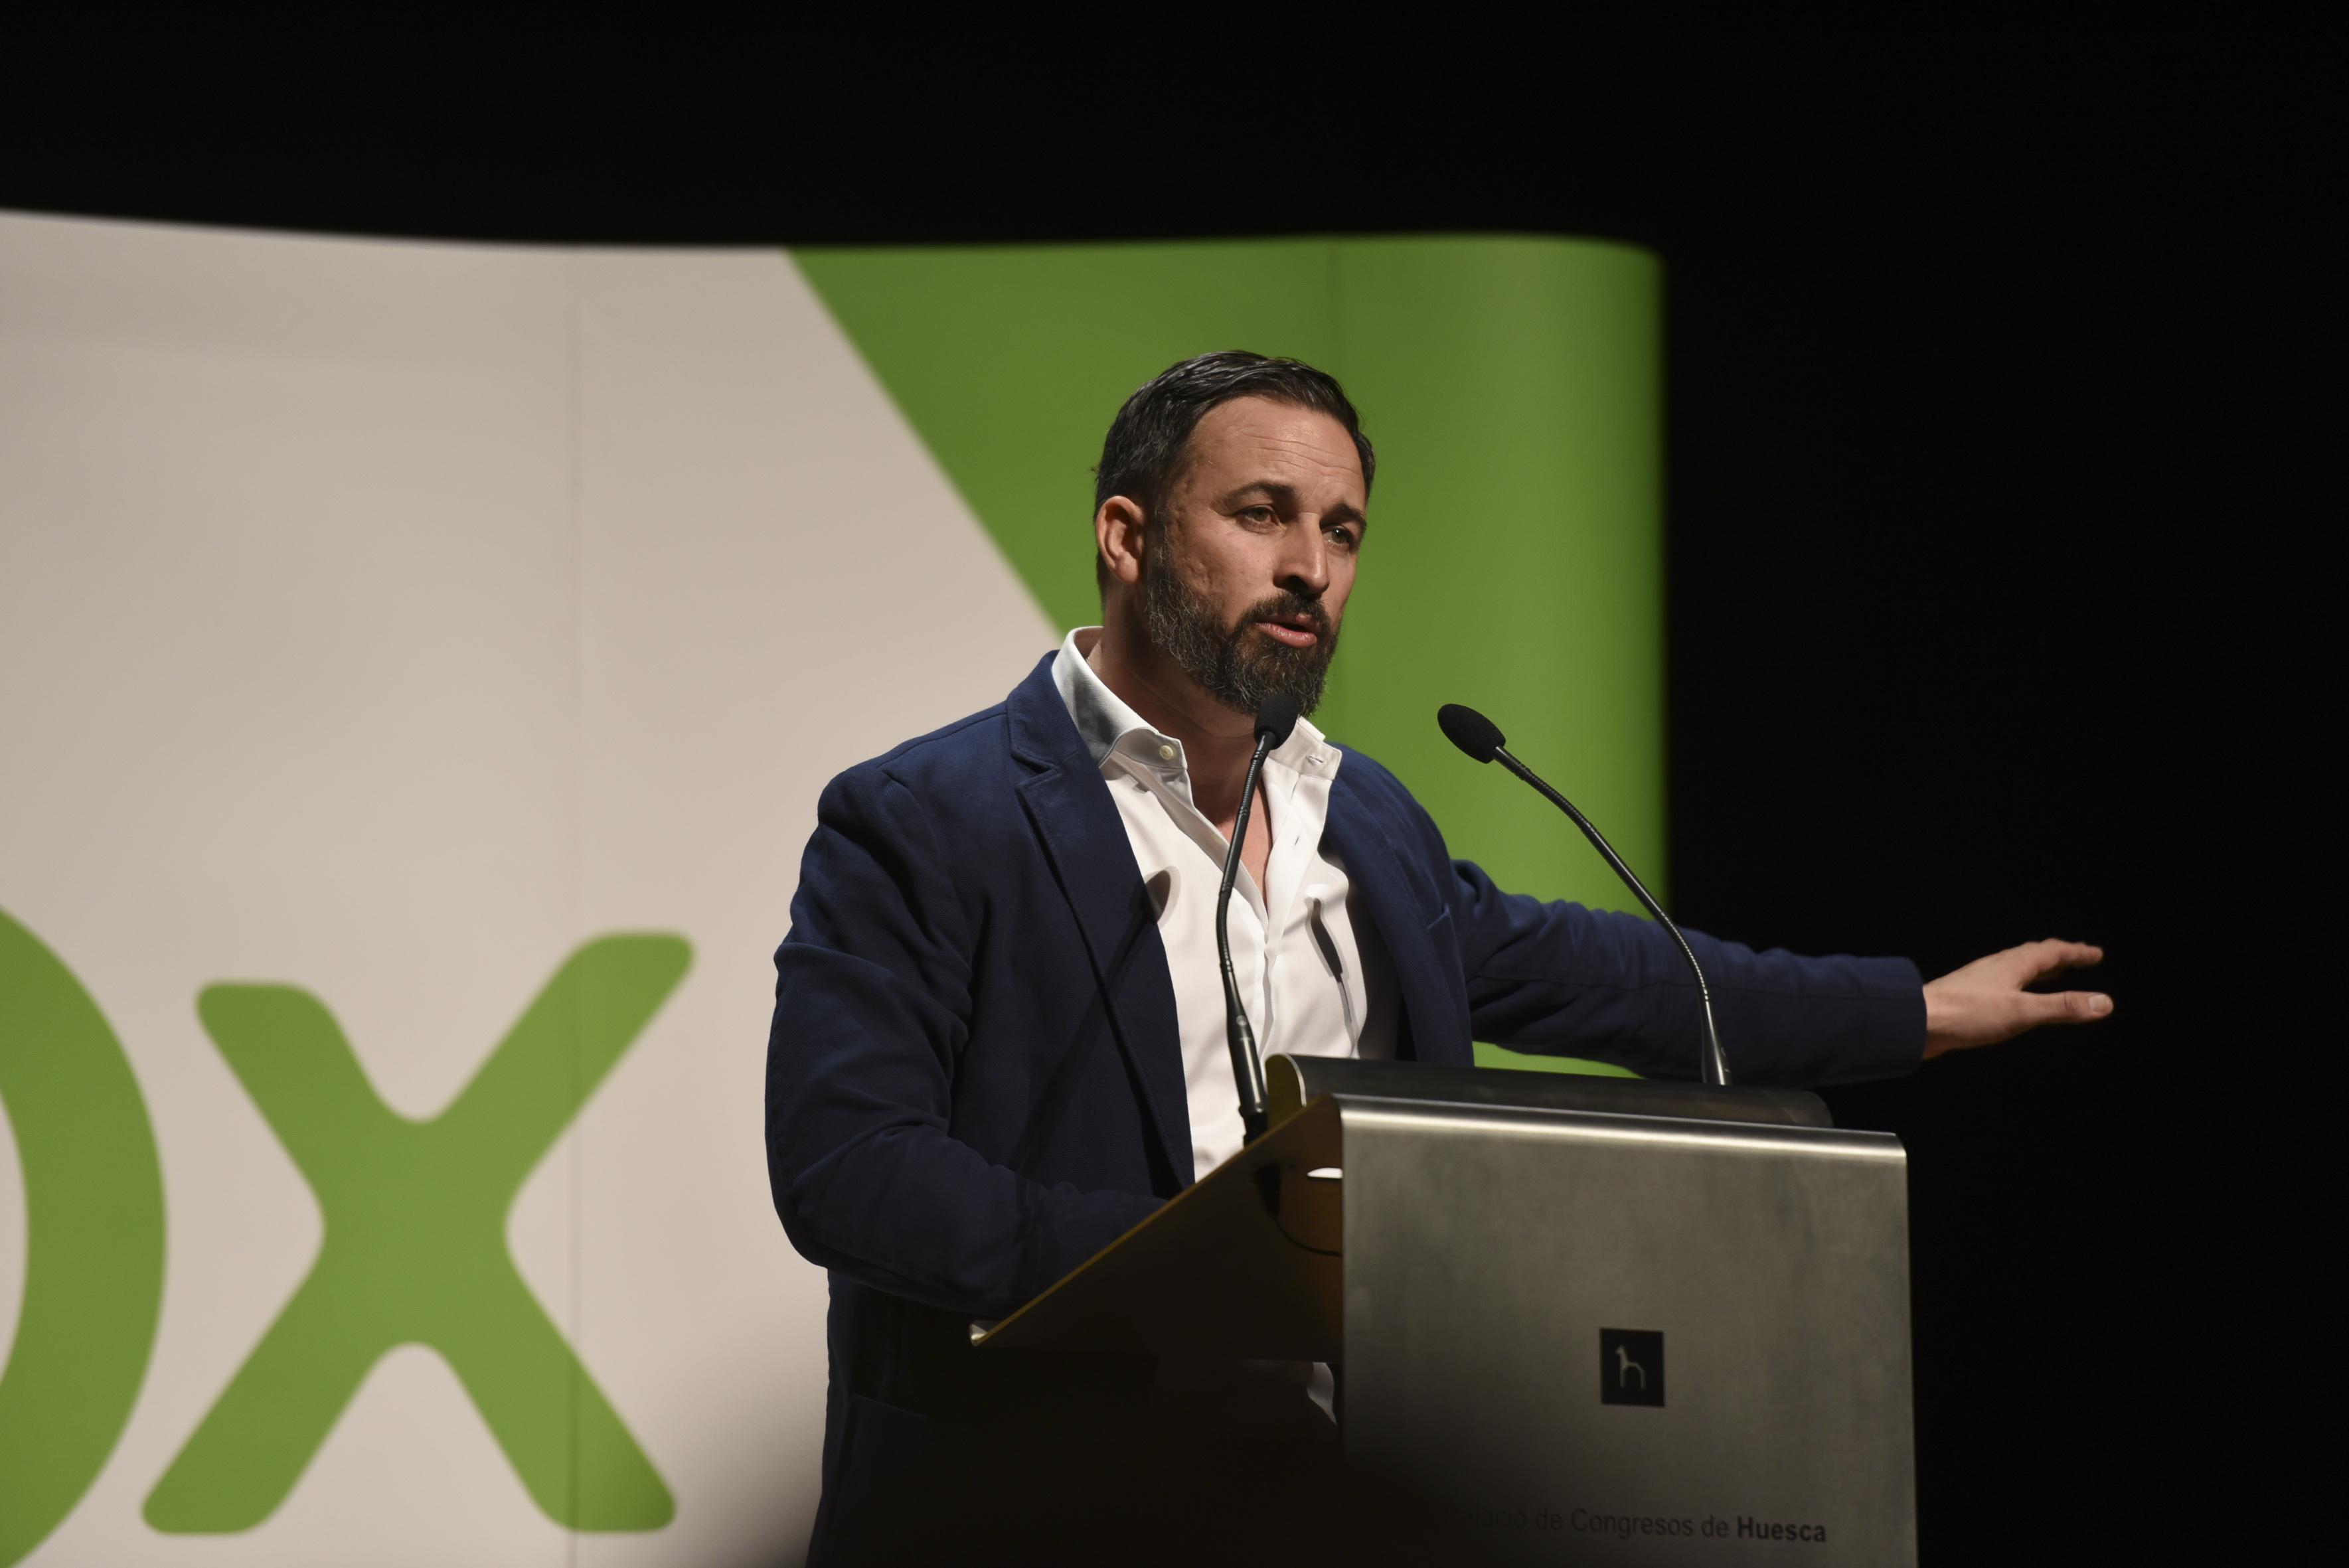 El presidente de Vox Santiago Abascal participa en un acto público en Huesca. EuropaPress